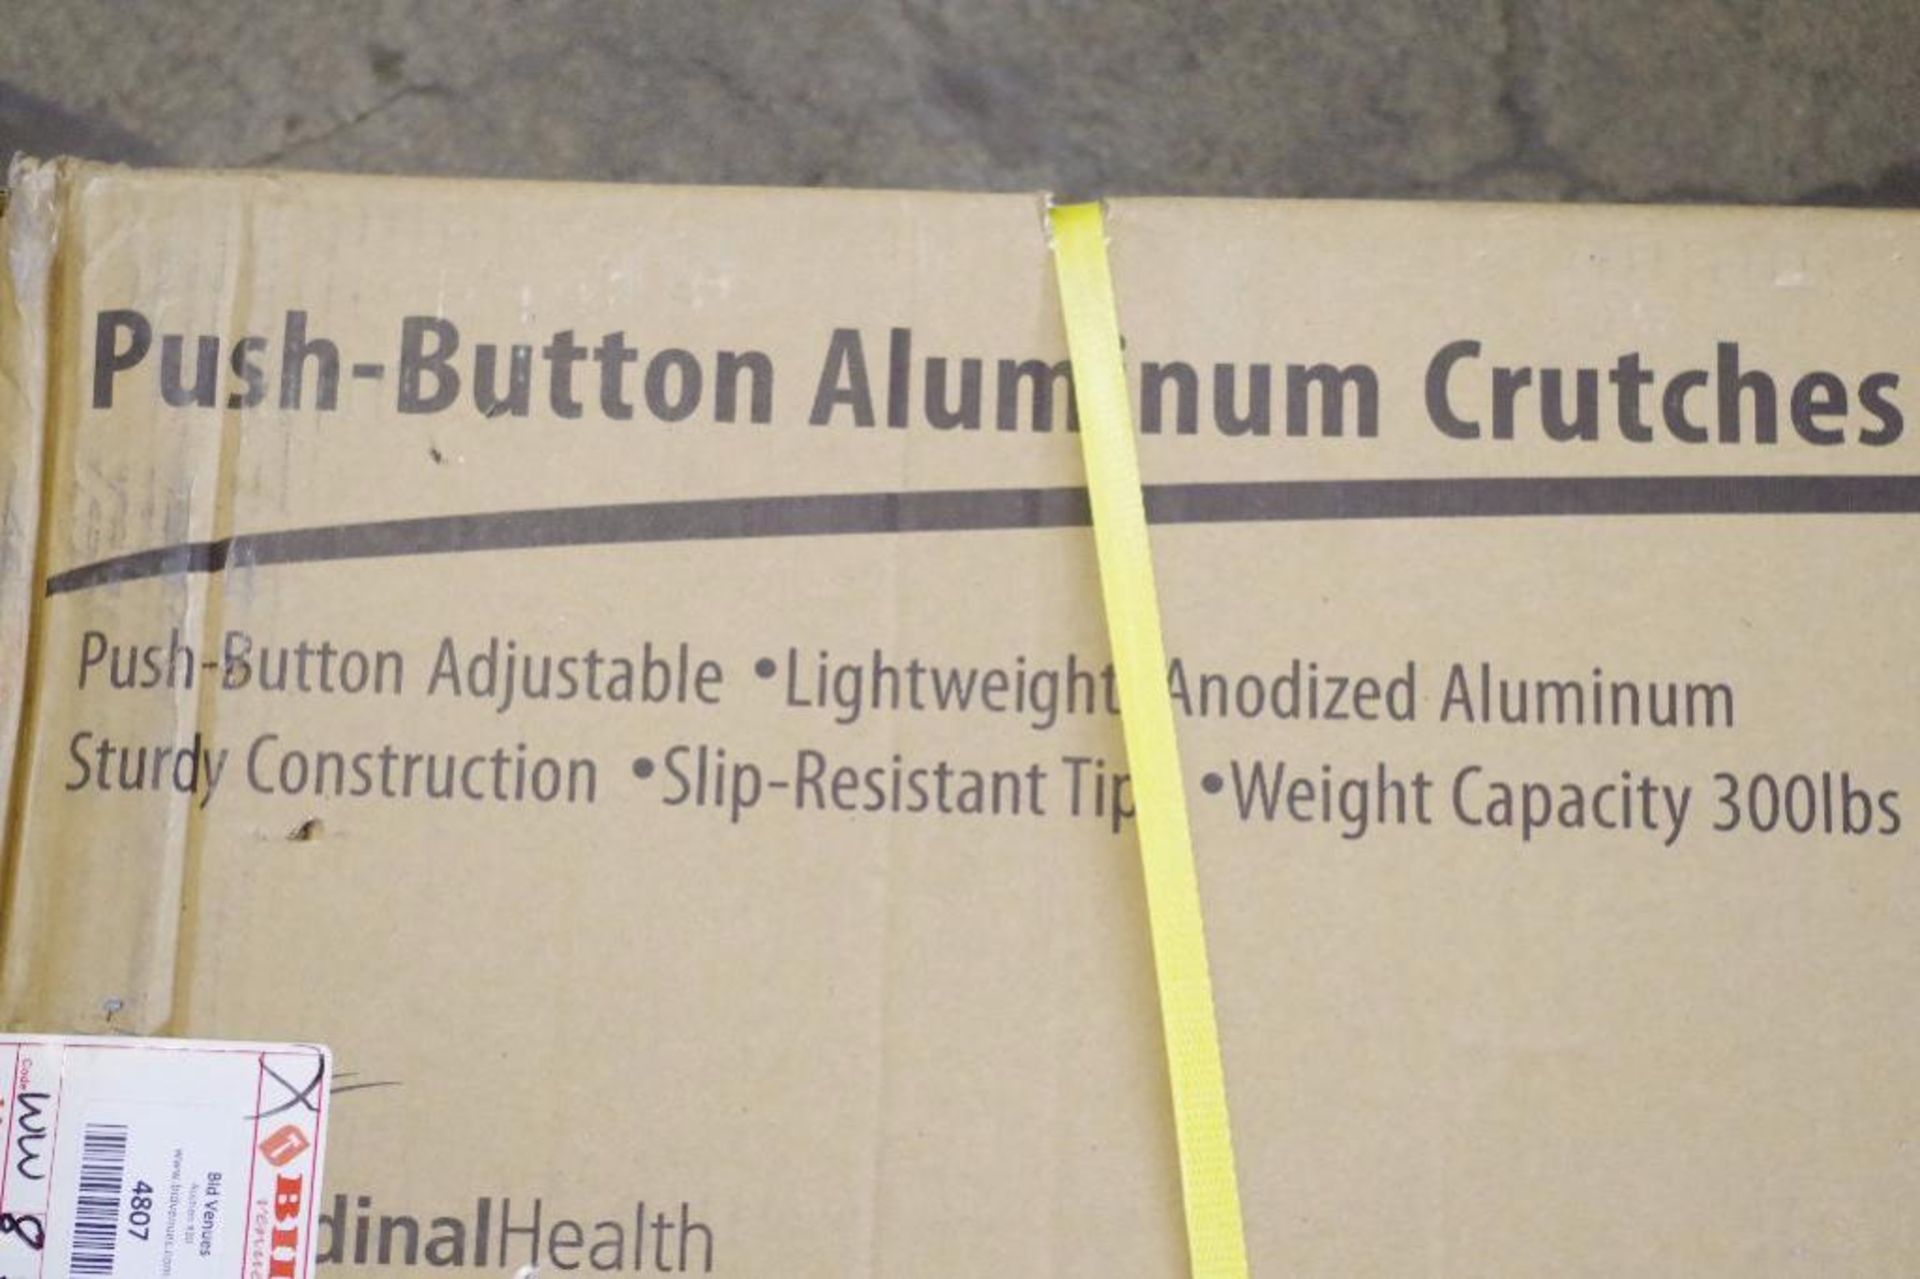 [8] Pairs Unused CARDINAL HEALTH Push-Button Aluminum Crutches M/N CA801TL - Image 3 of 4